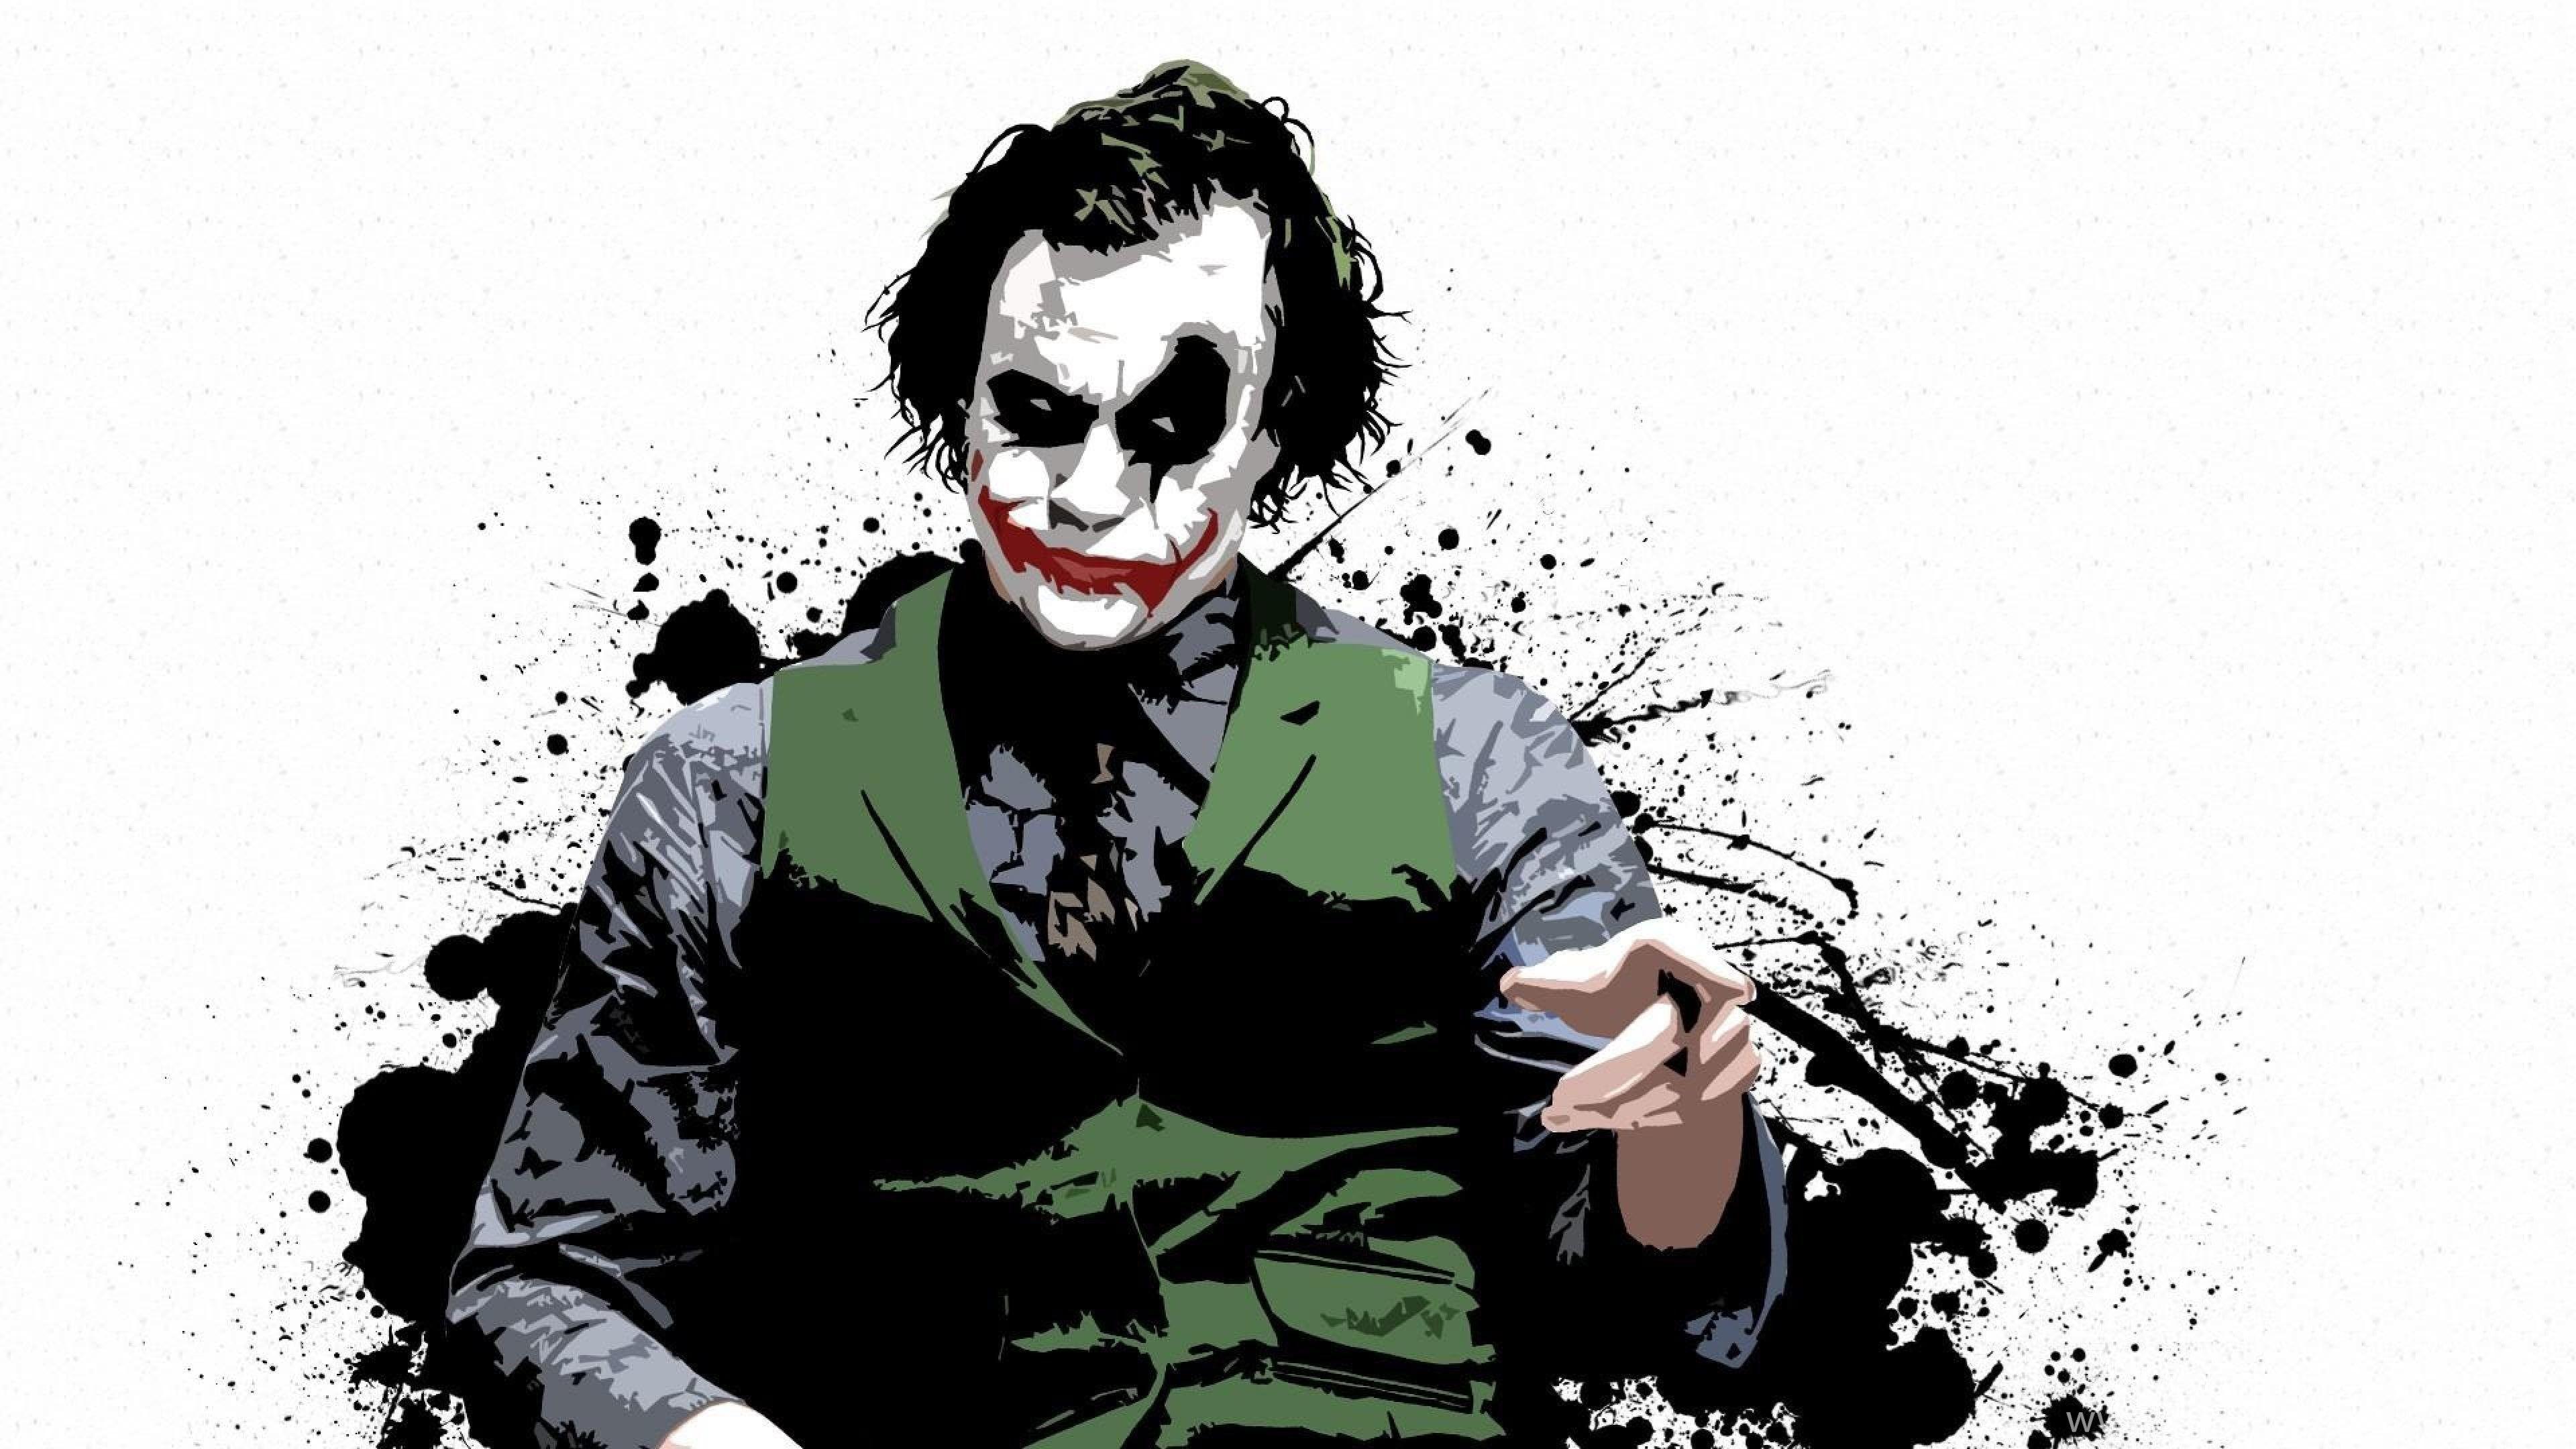 Dark Knight Joker in 4K Ultra HD Wallpapers - Top Free Dark Knight ...